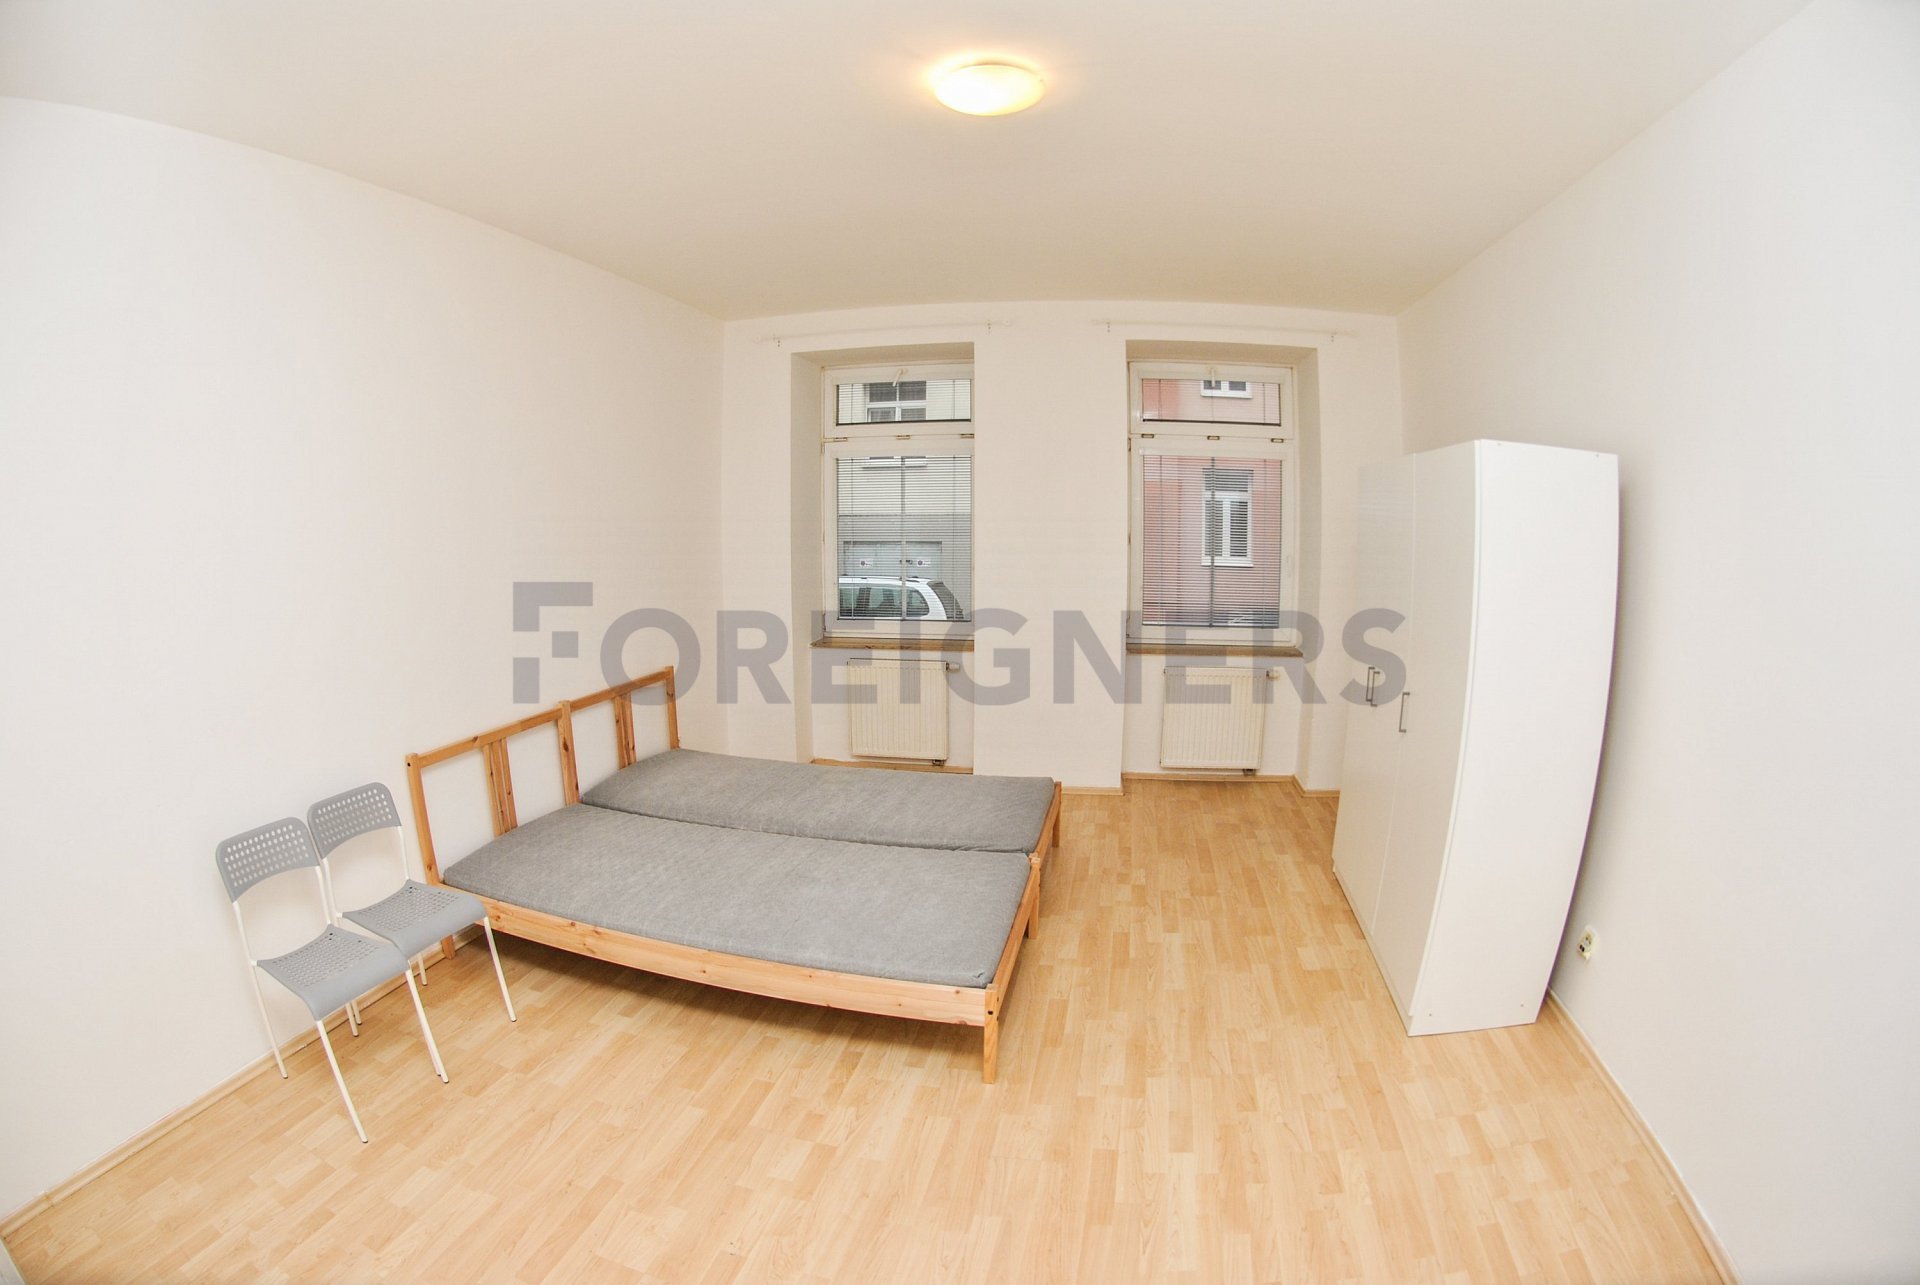 Room (pokoj) - Apartment for Rent in Brno | Foreigners.cz